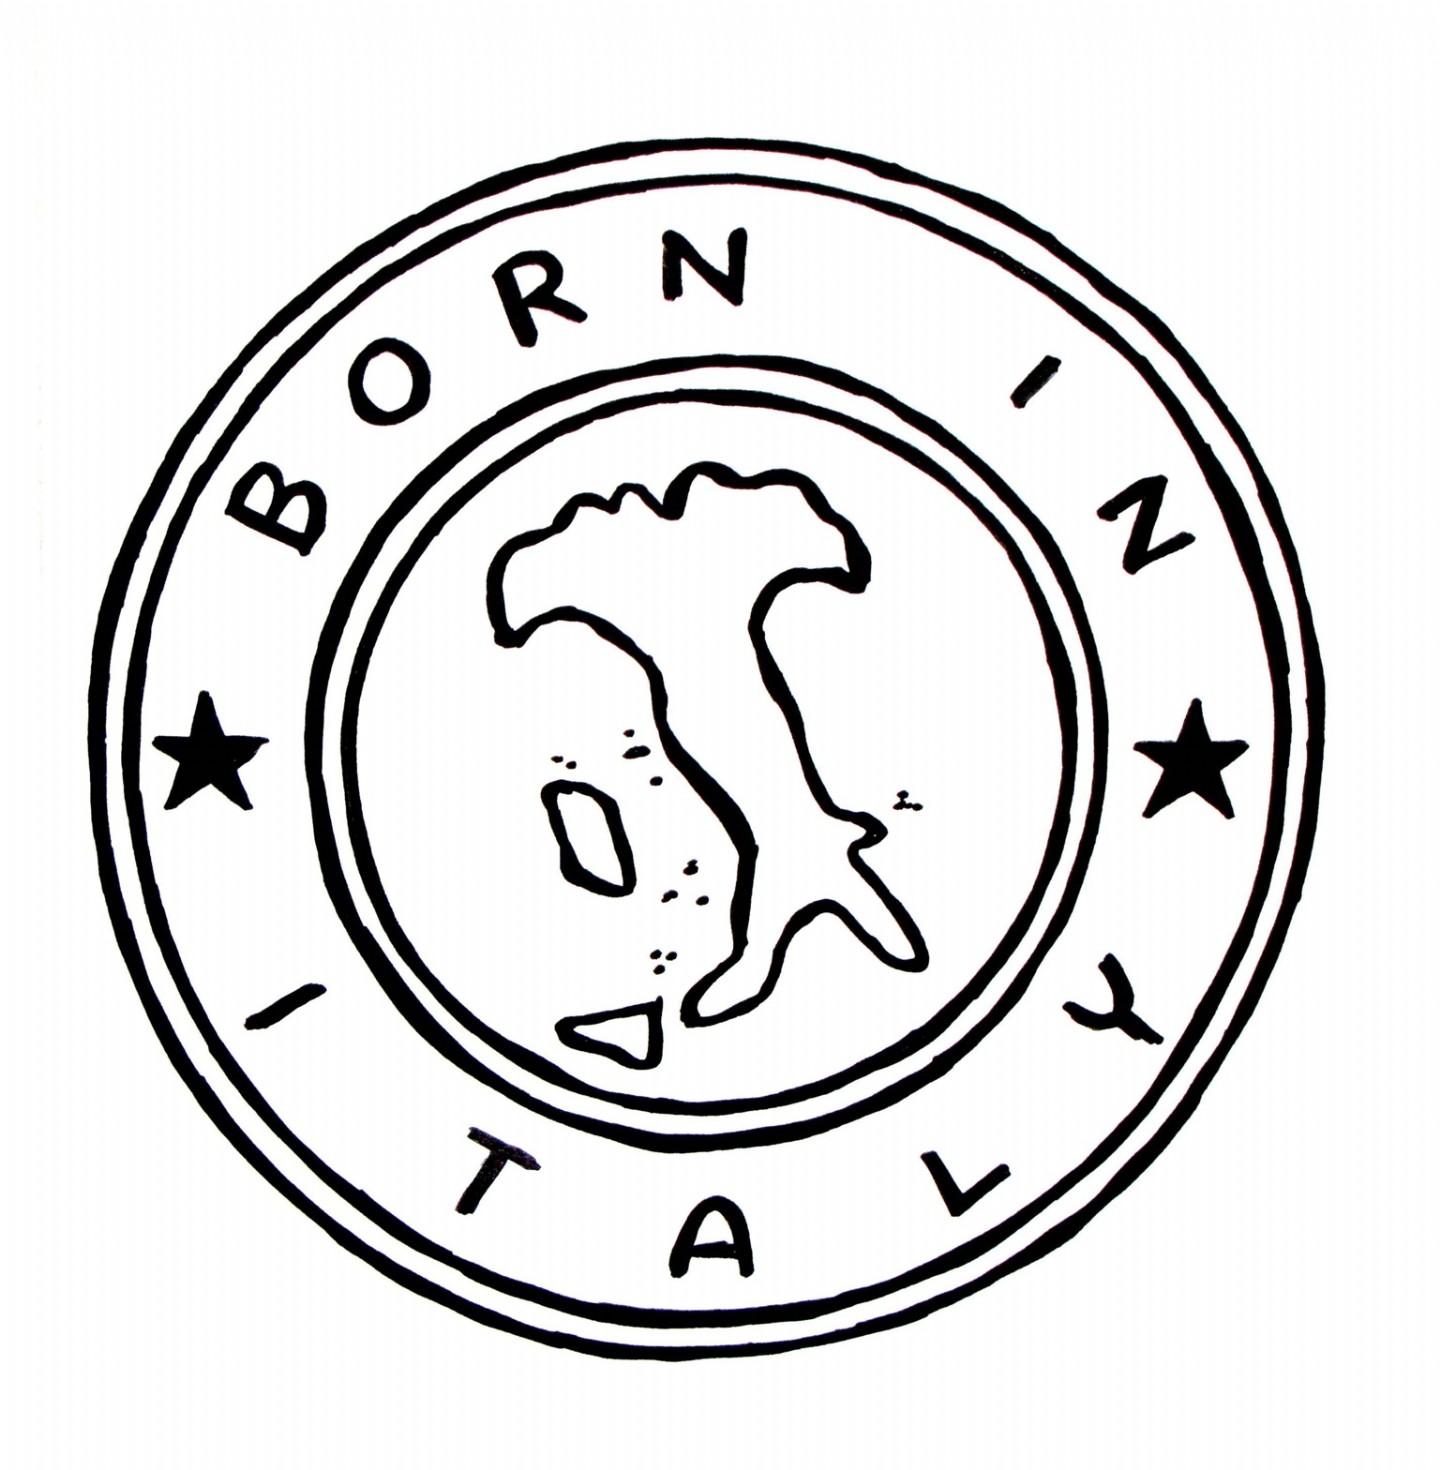 Born in Italy